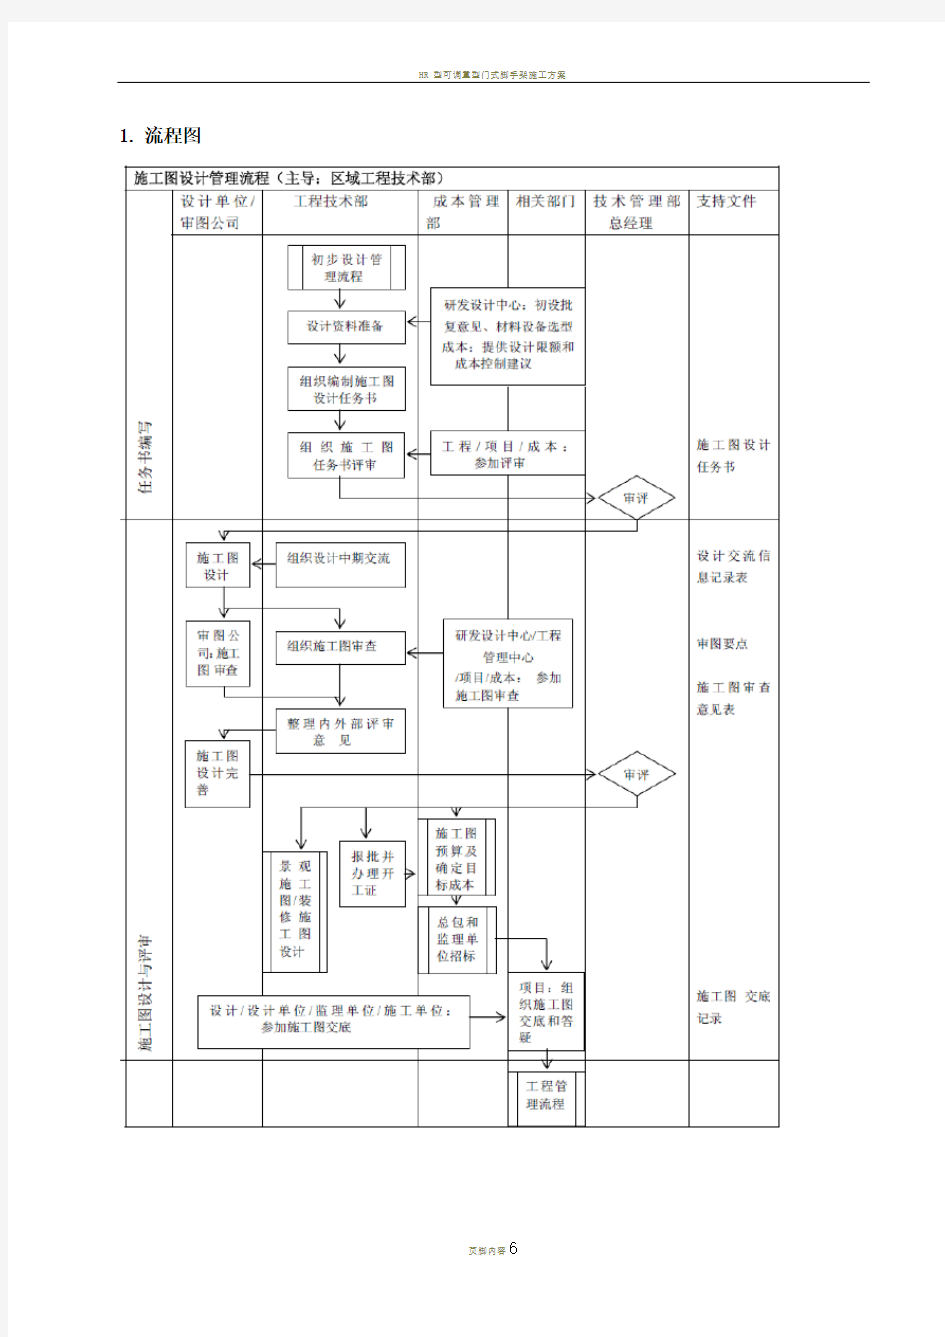 HRE-P1-SJ04施工图设计管理流程